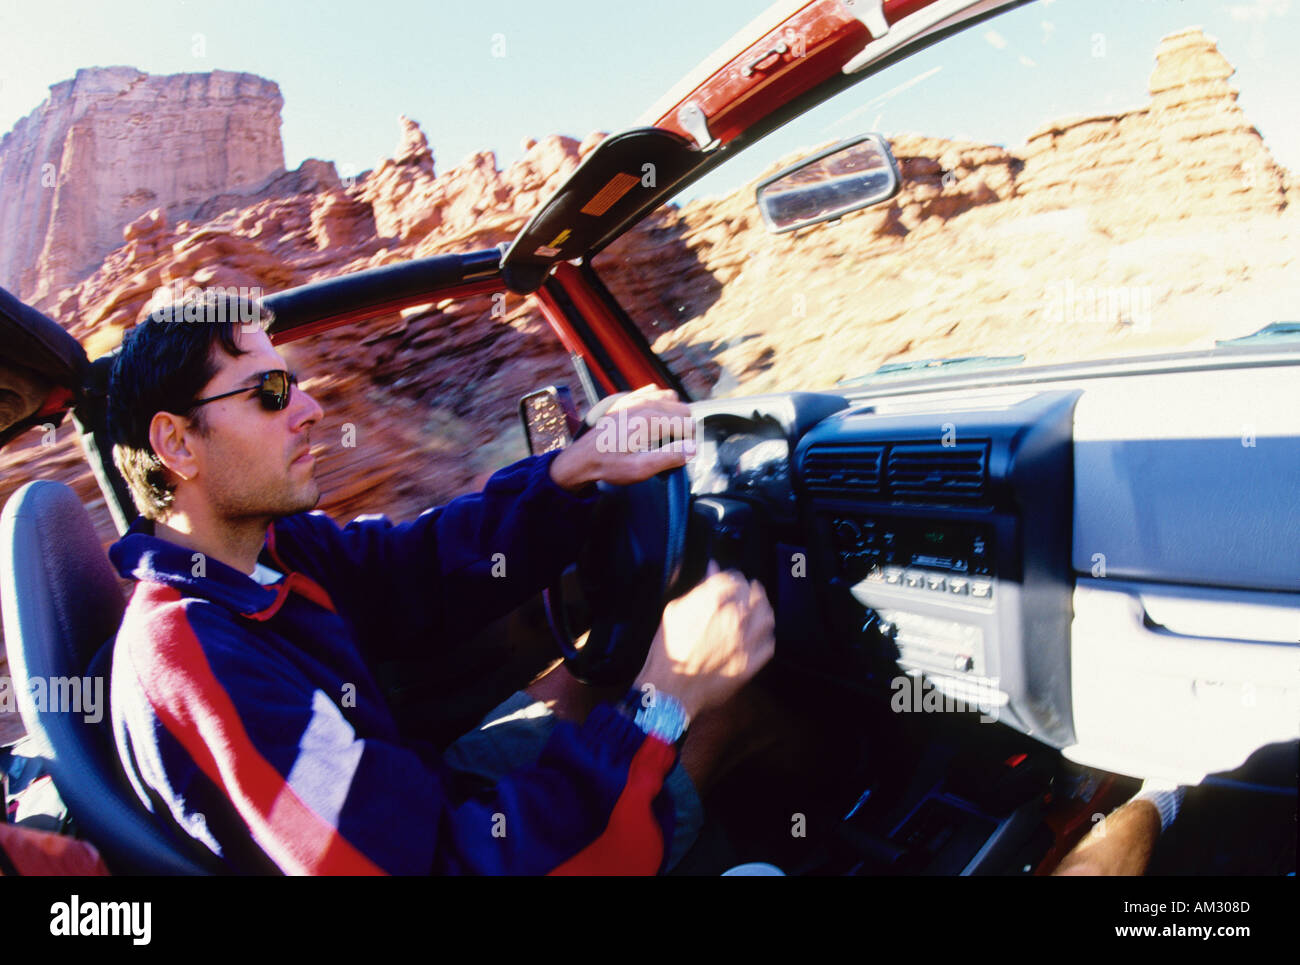 4x4 off road driving near Moab Utah USA Stock Photo